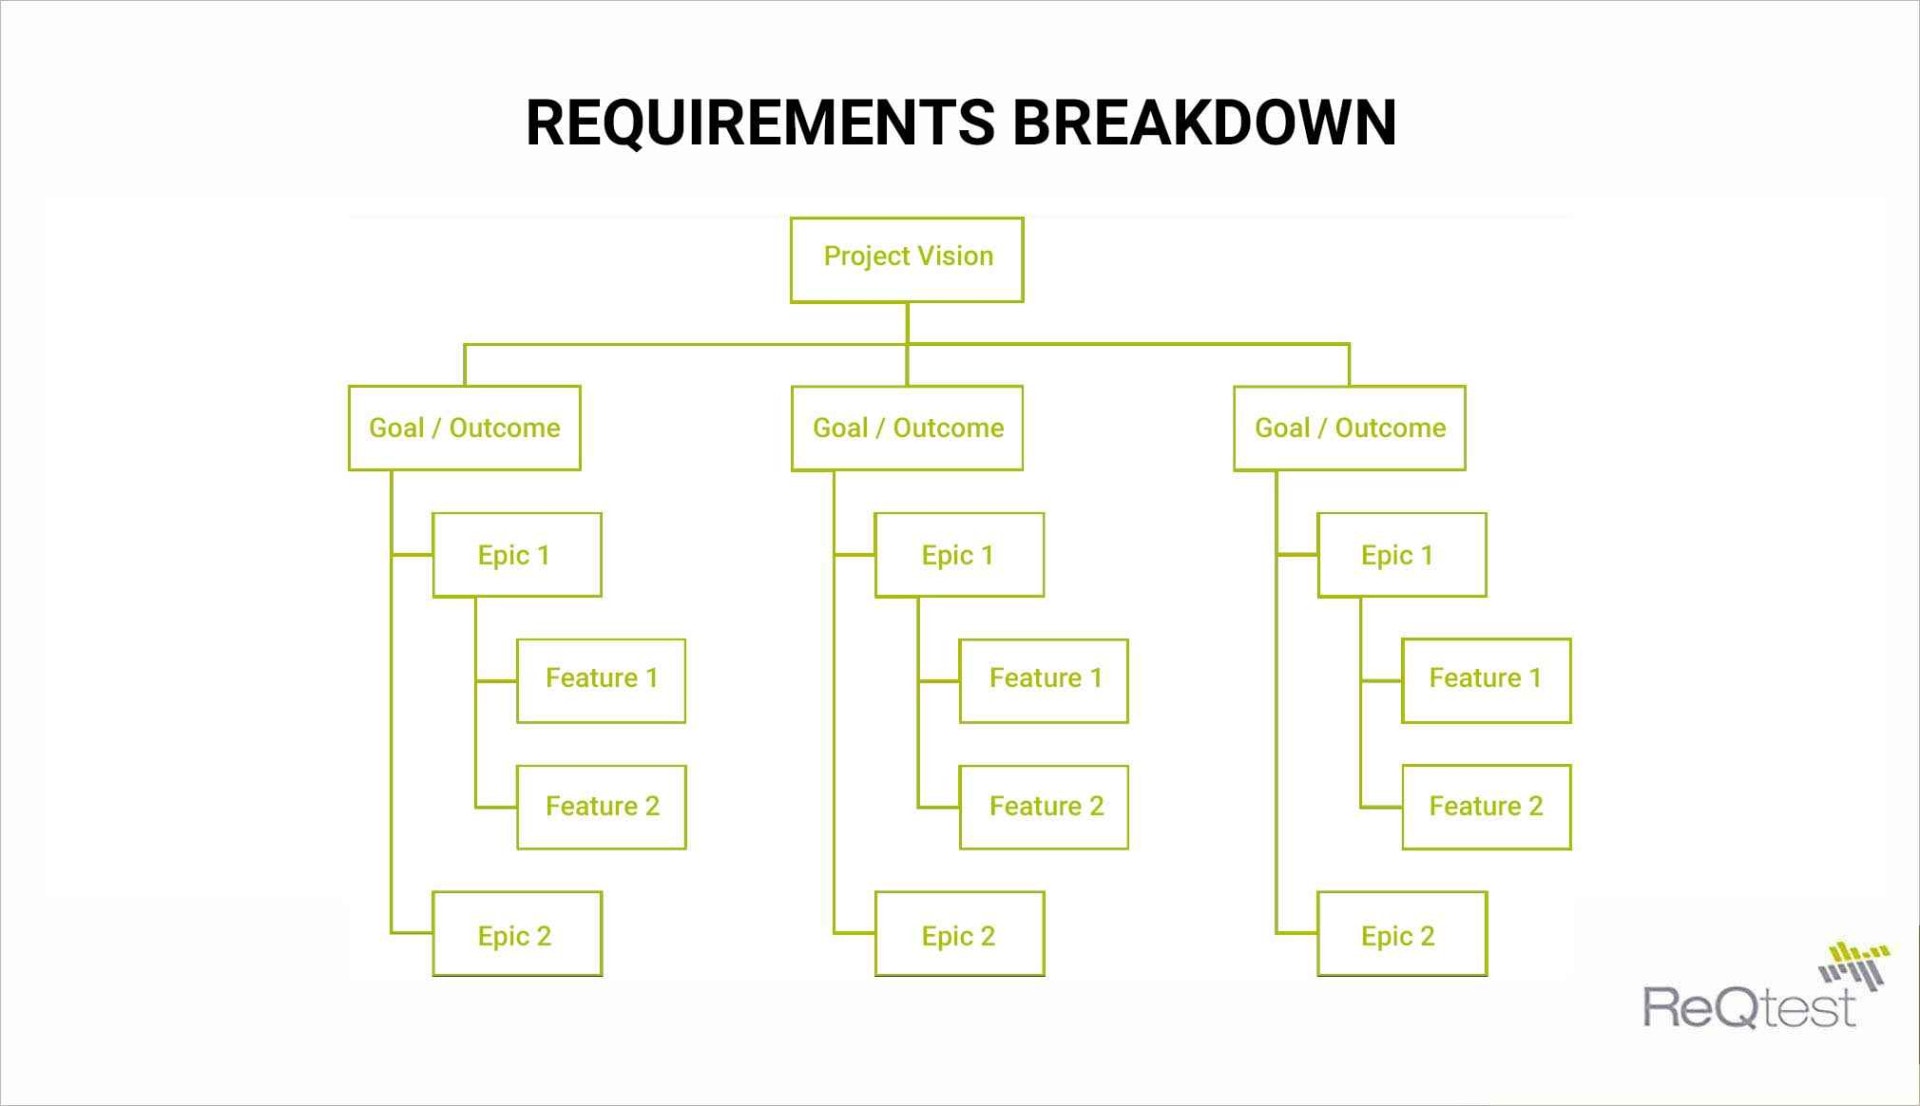 Requirements breakdown structure